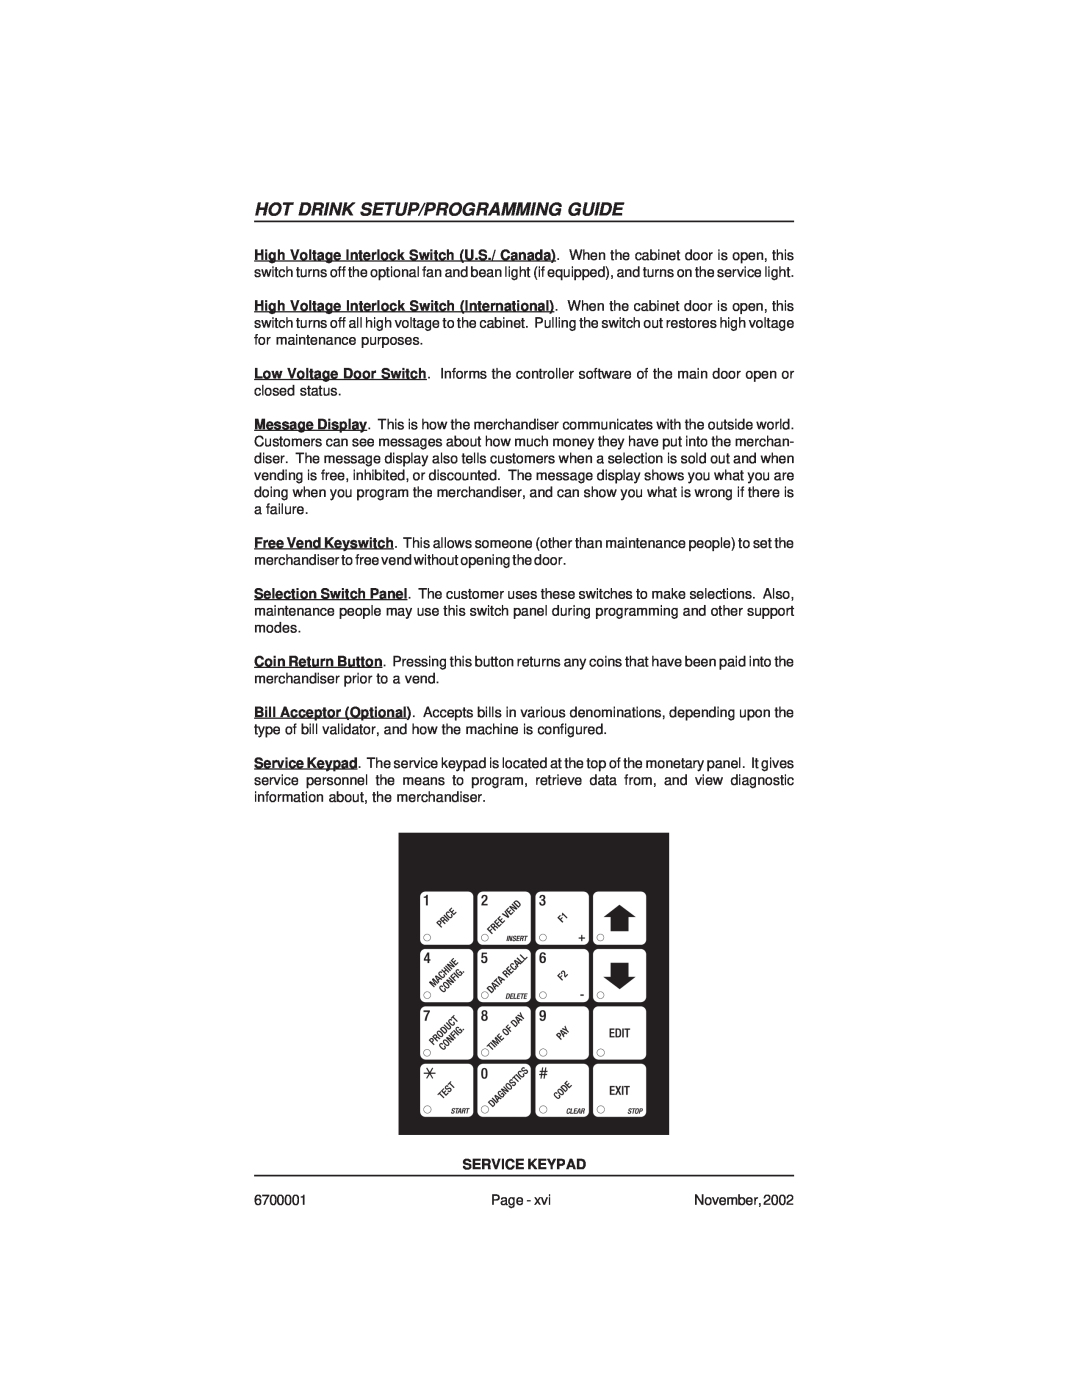 Crane Merchandising Systems 670, 678 manual Hot Drink Setup/Programming Guide, Service Keypad 